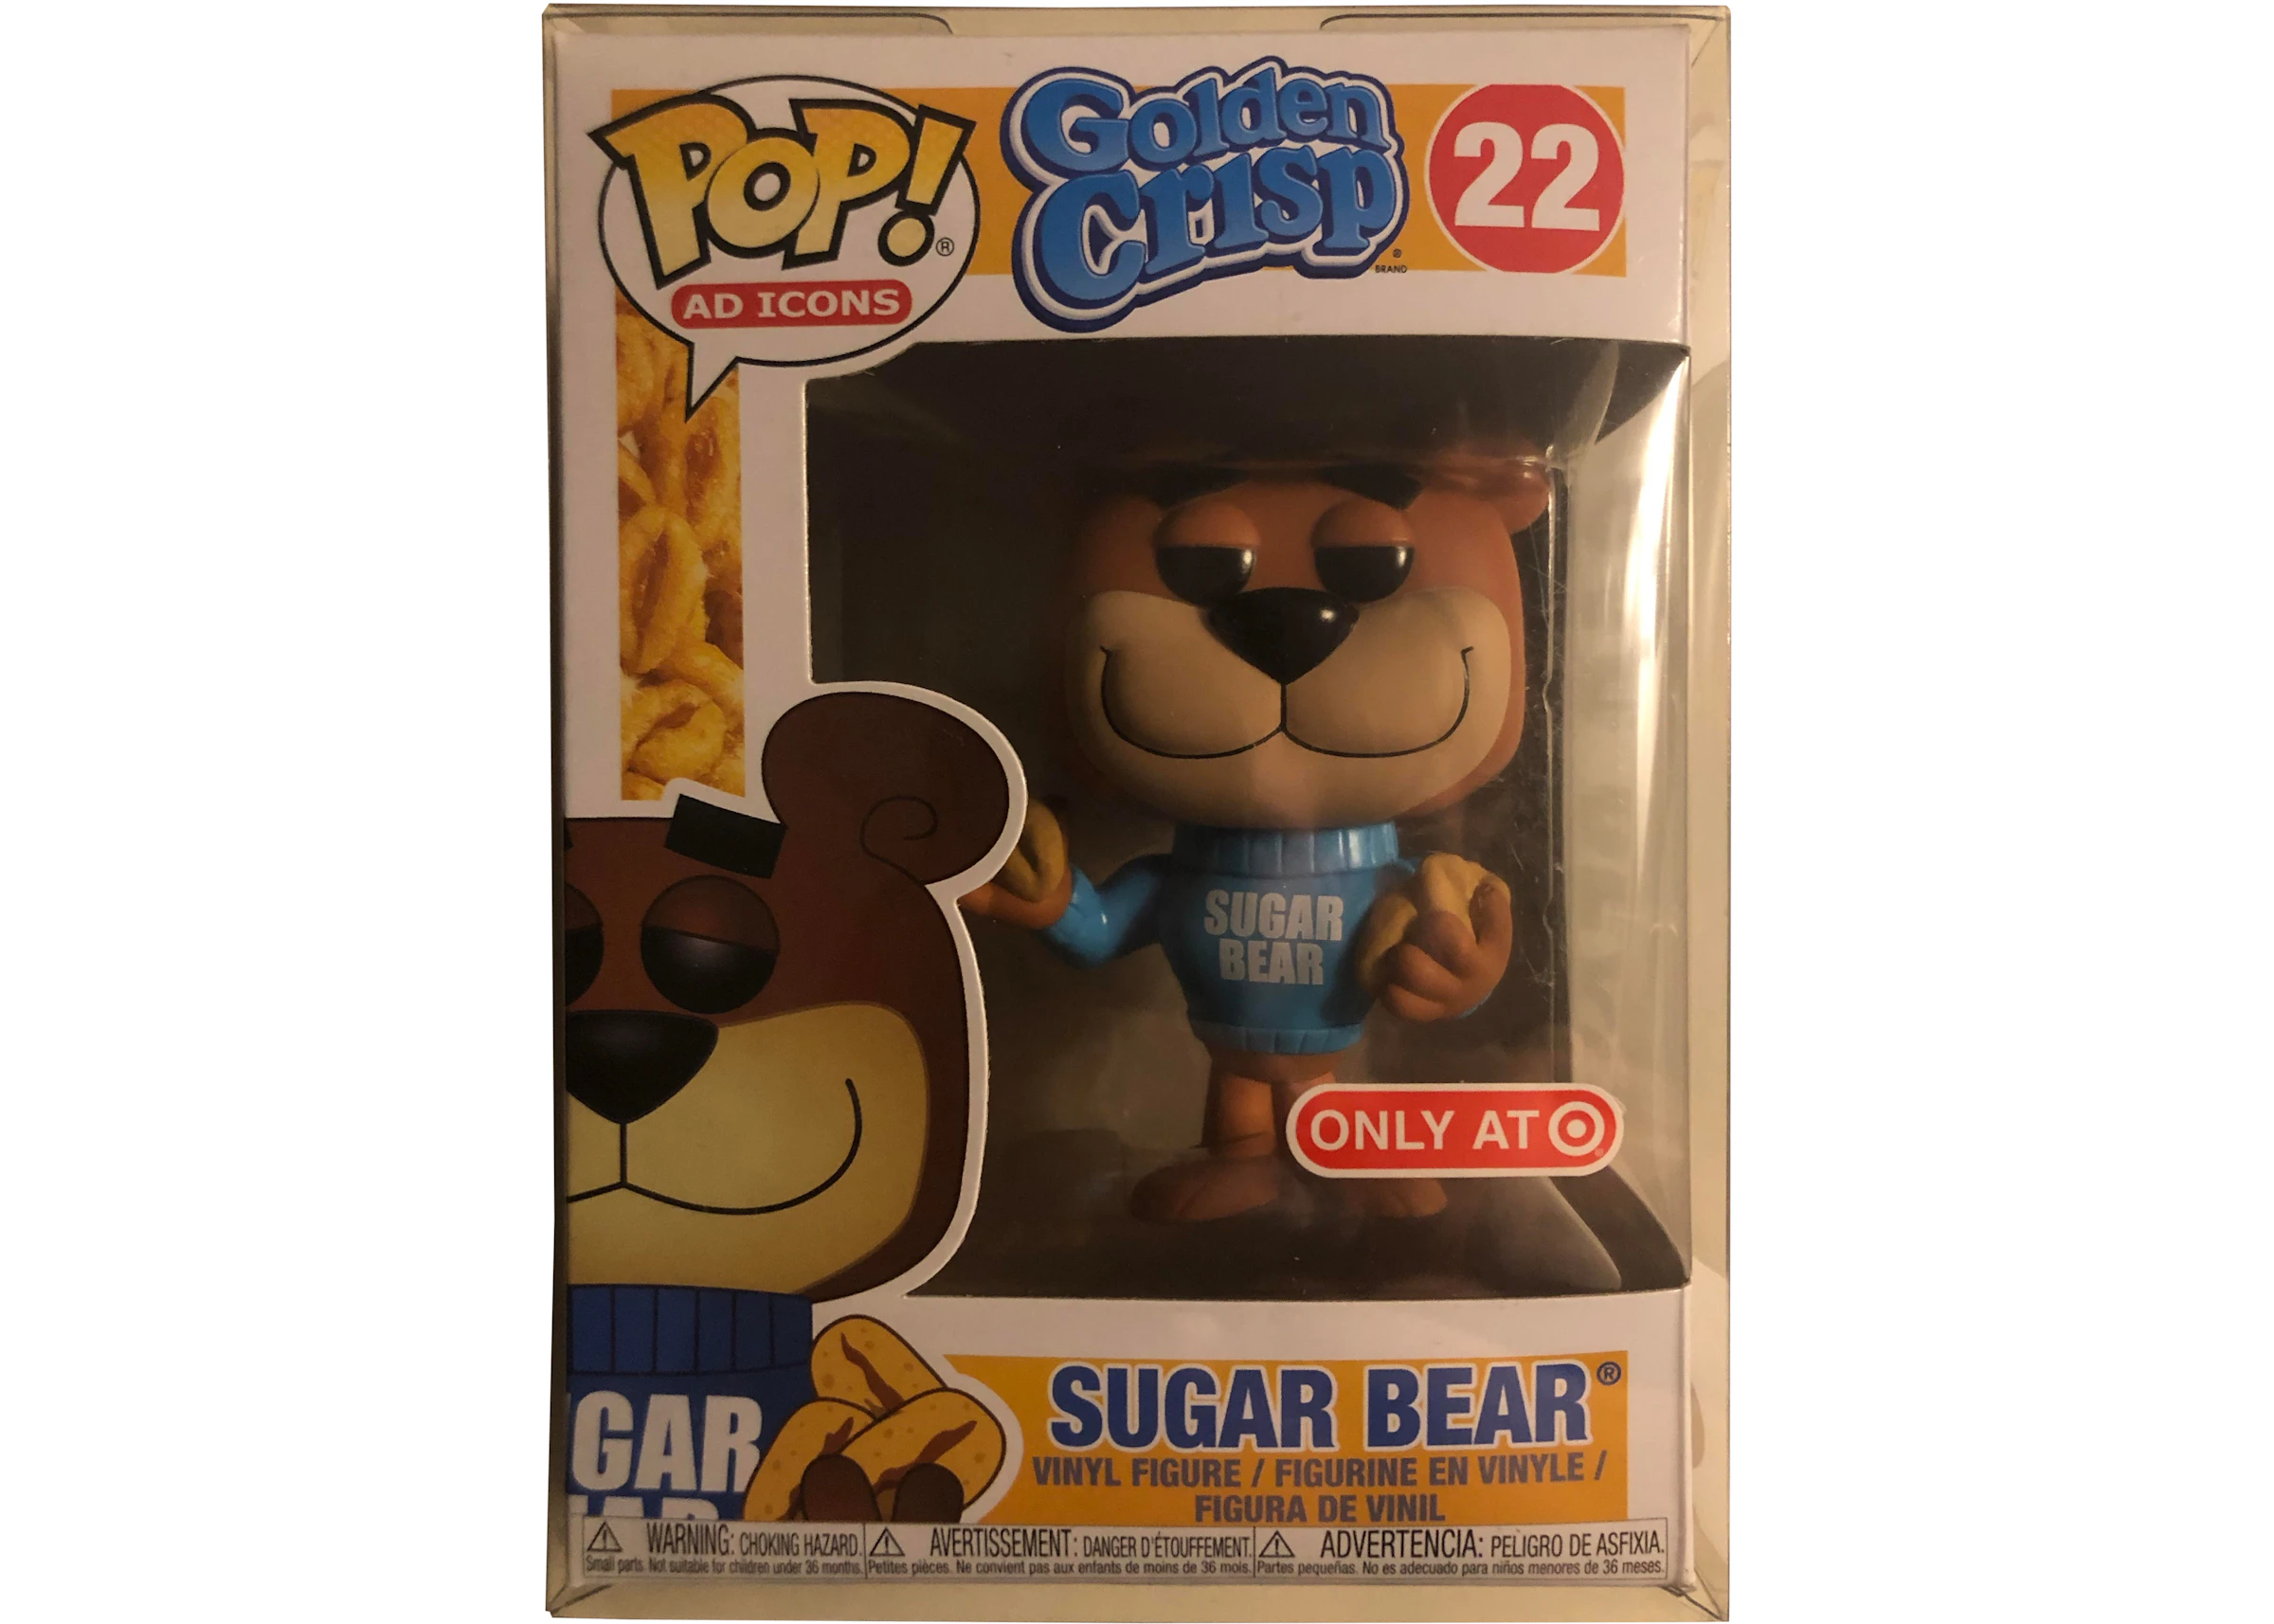 Funko Pop! Ad Icons Golden Crisps Sugar Bear Target Exclusive Figure #22 -  US